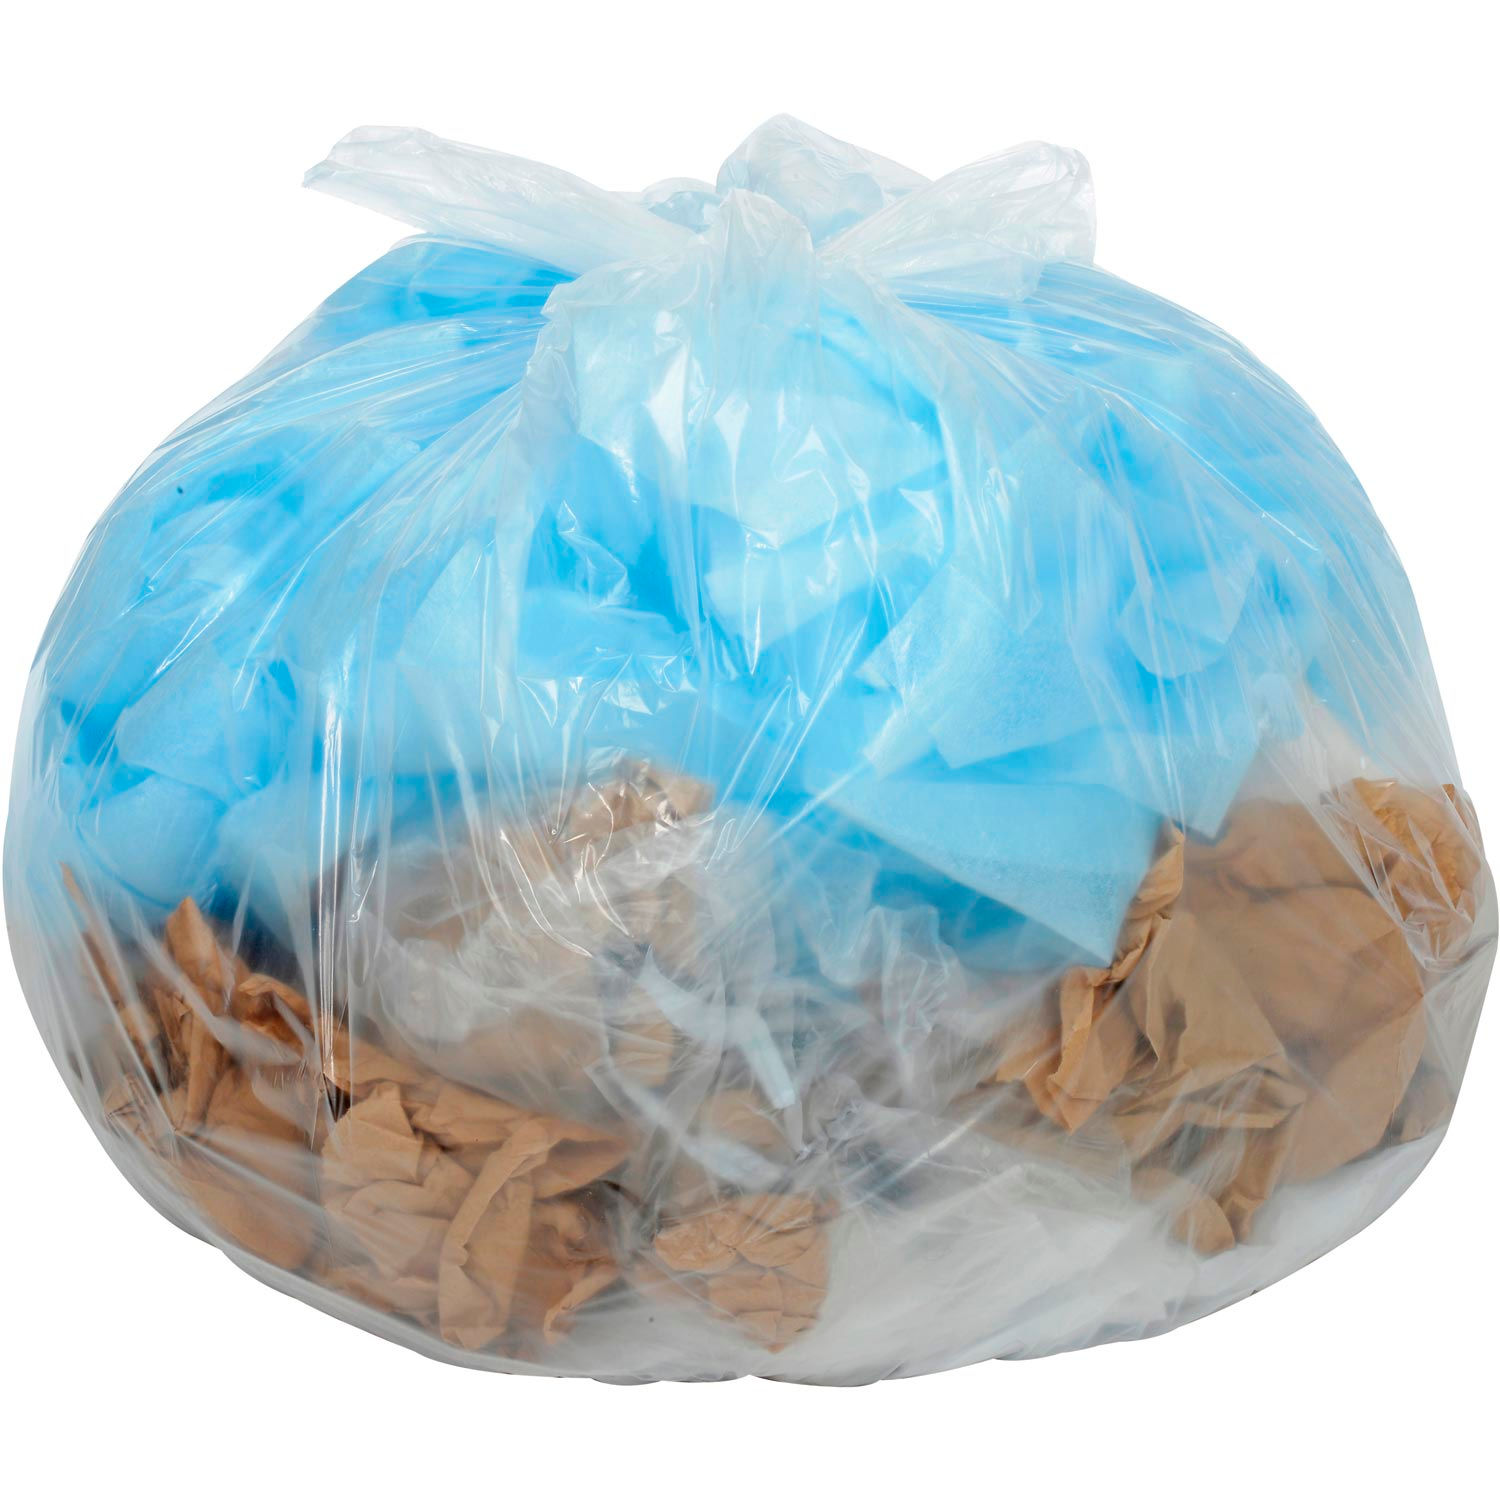 clear plastic trash bags 30 gallon